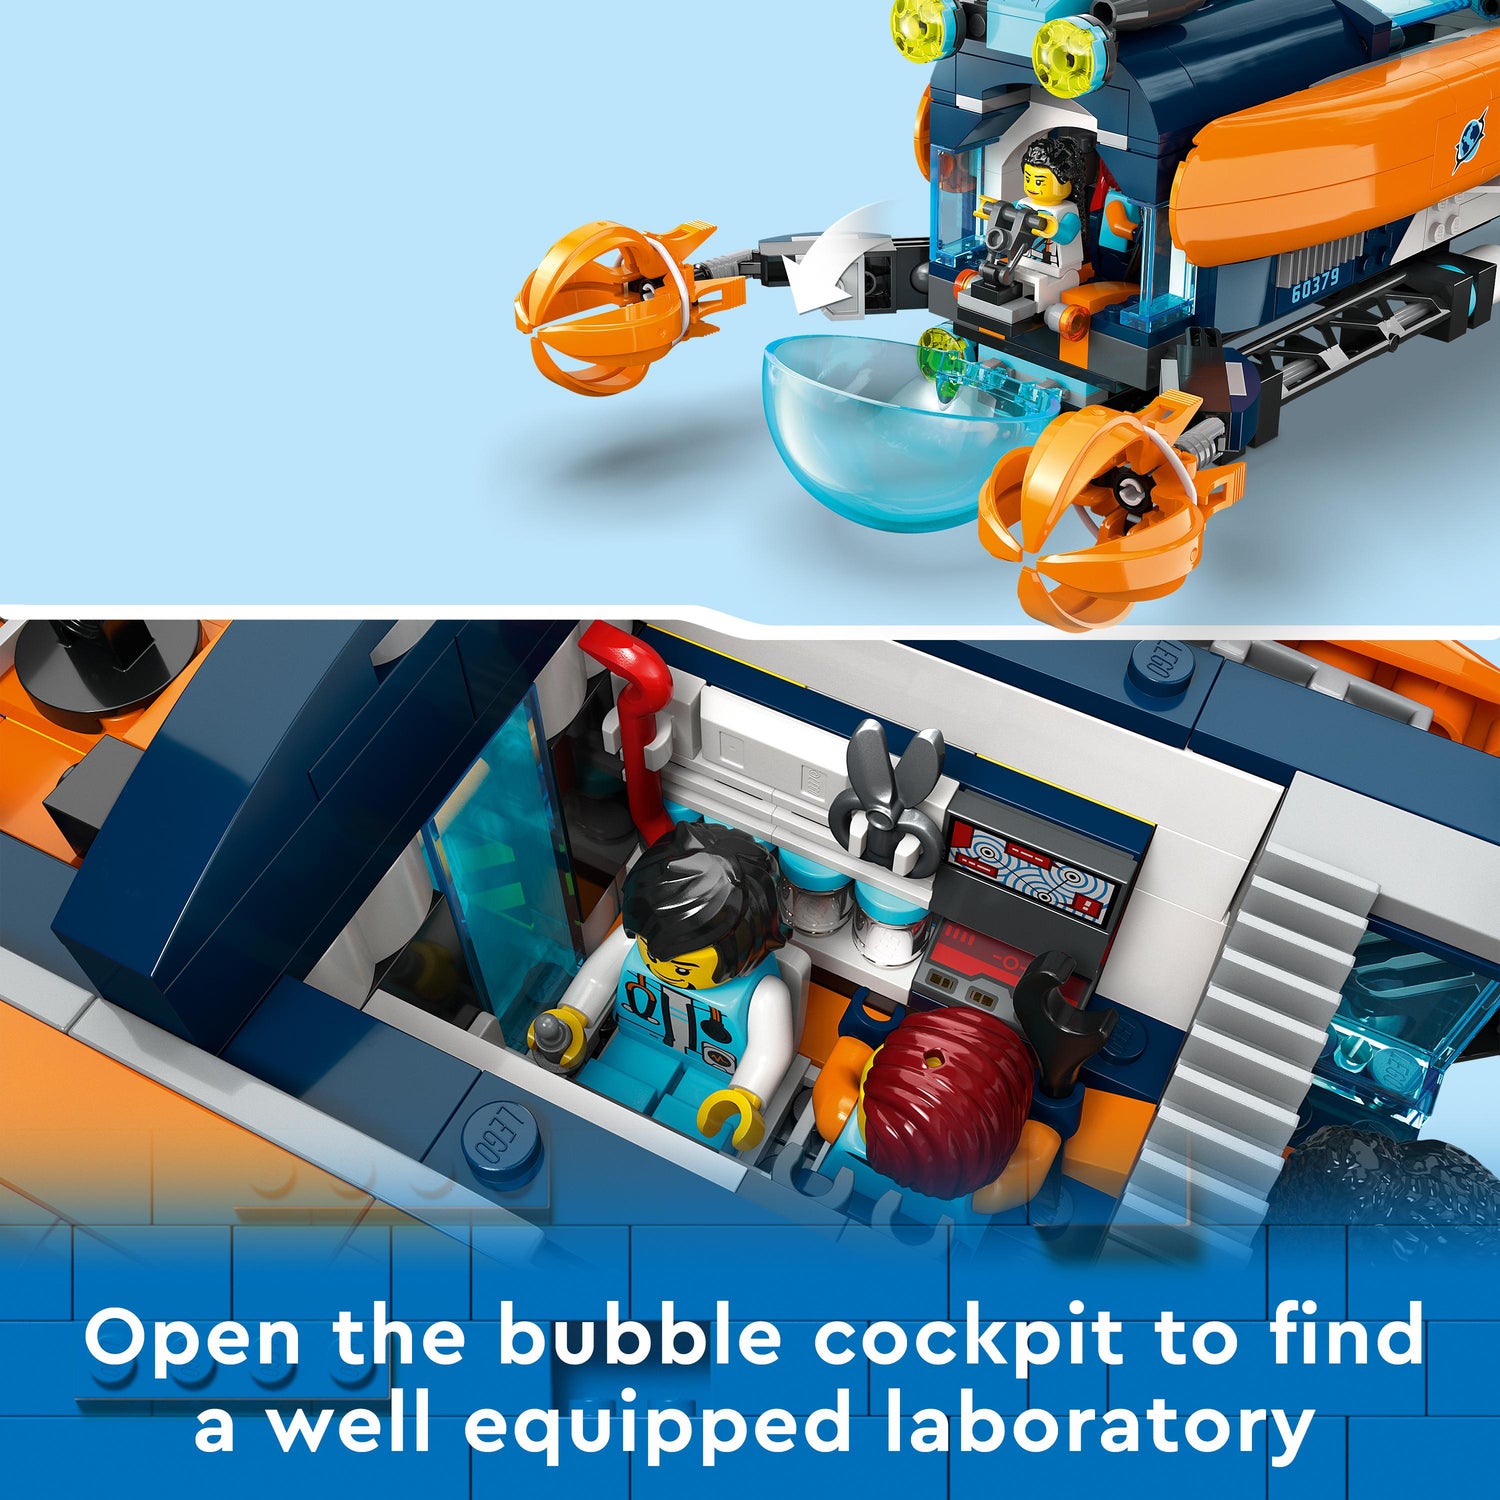 LEGO® City Deep-Sea Explorer Submarine Toy